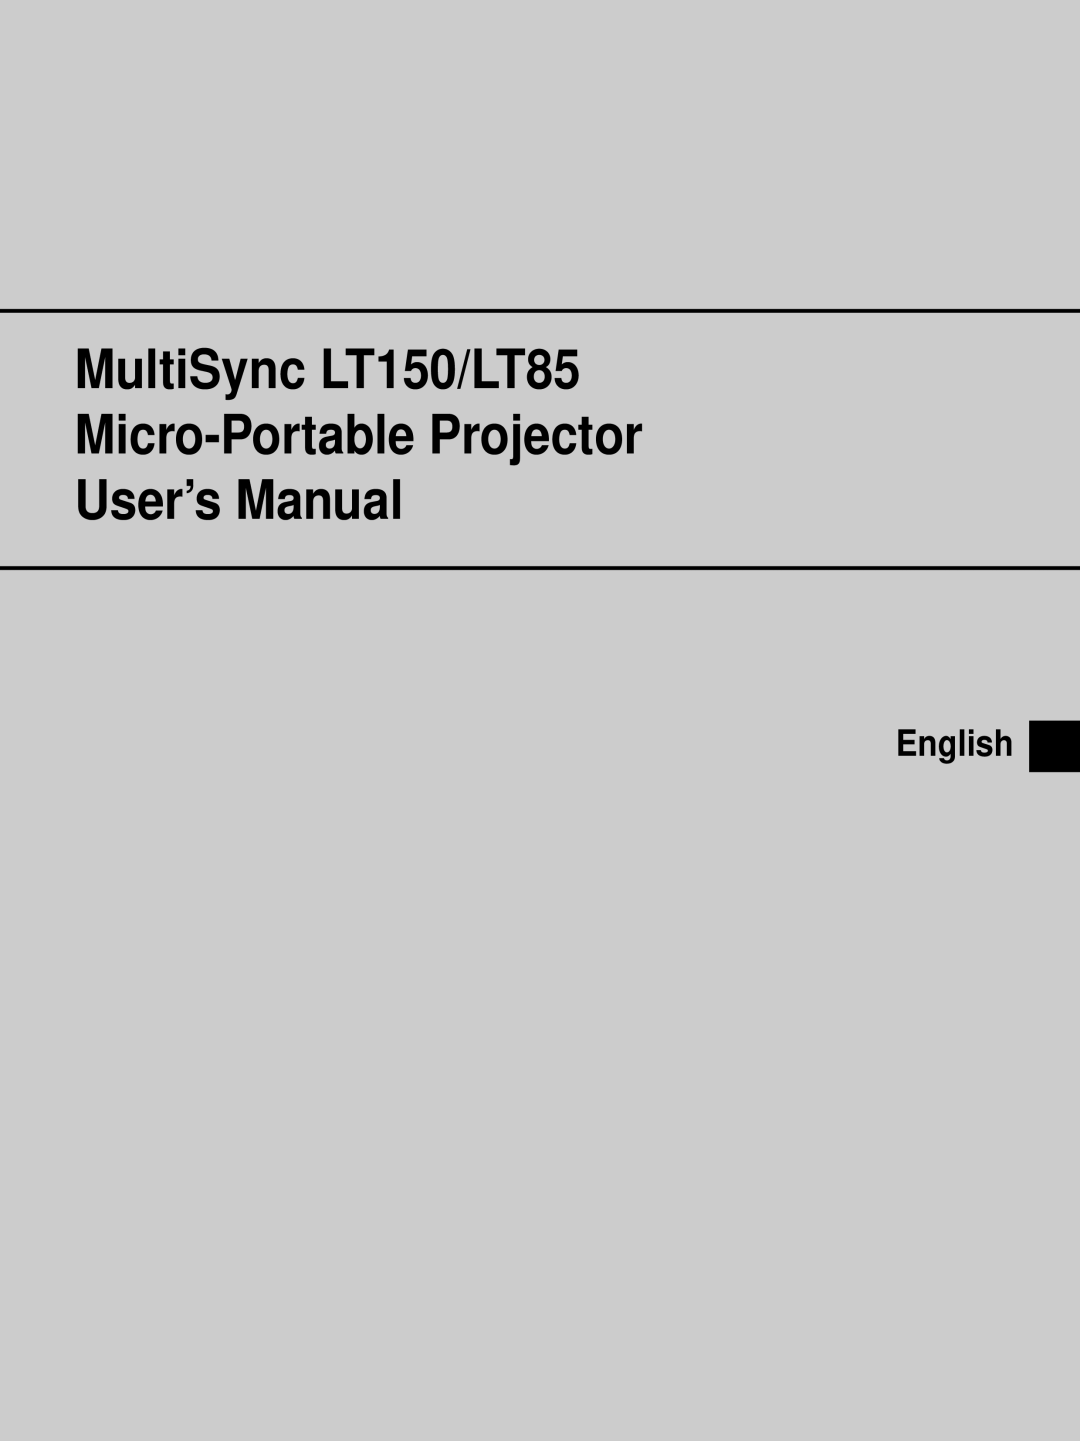 NEC user manual MultiSync LT150/LT85 Micro-PortableProjector, User’s Manual, English 